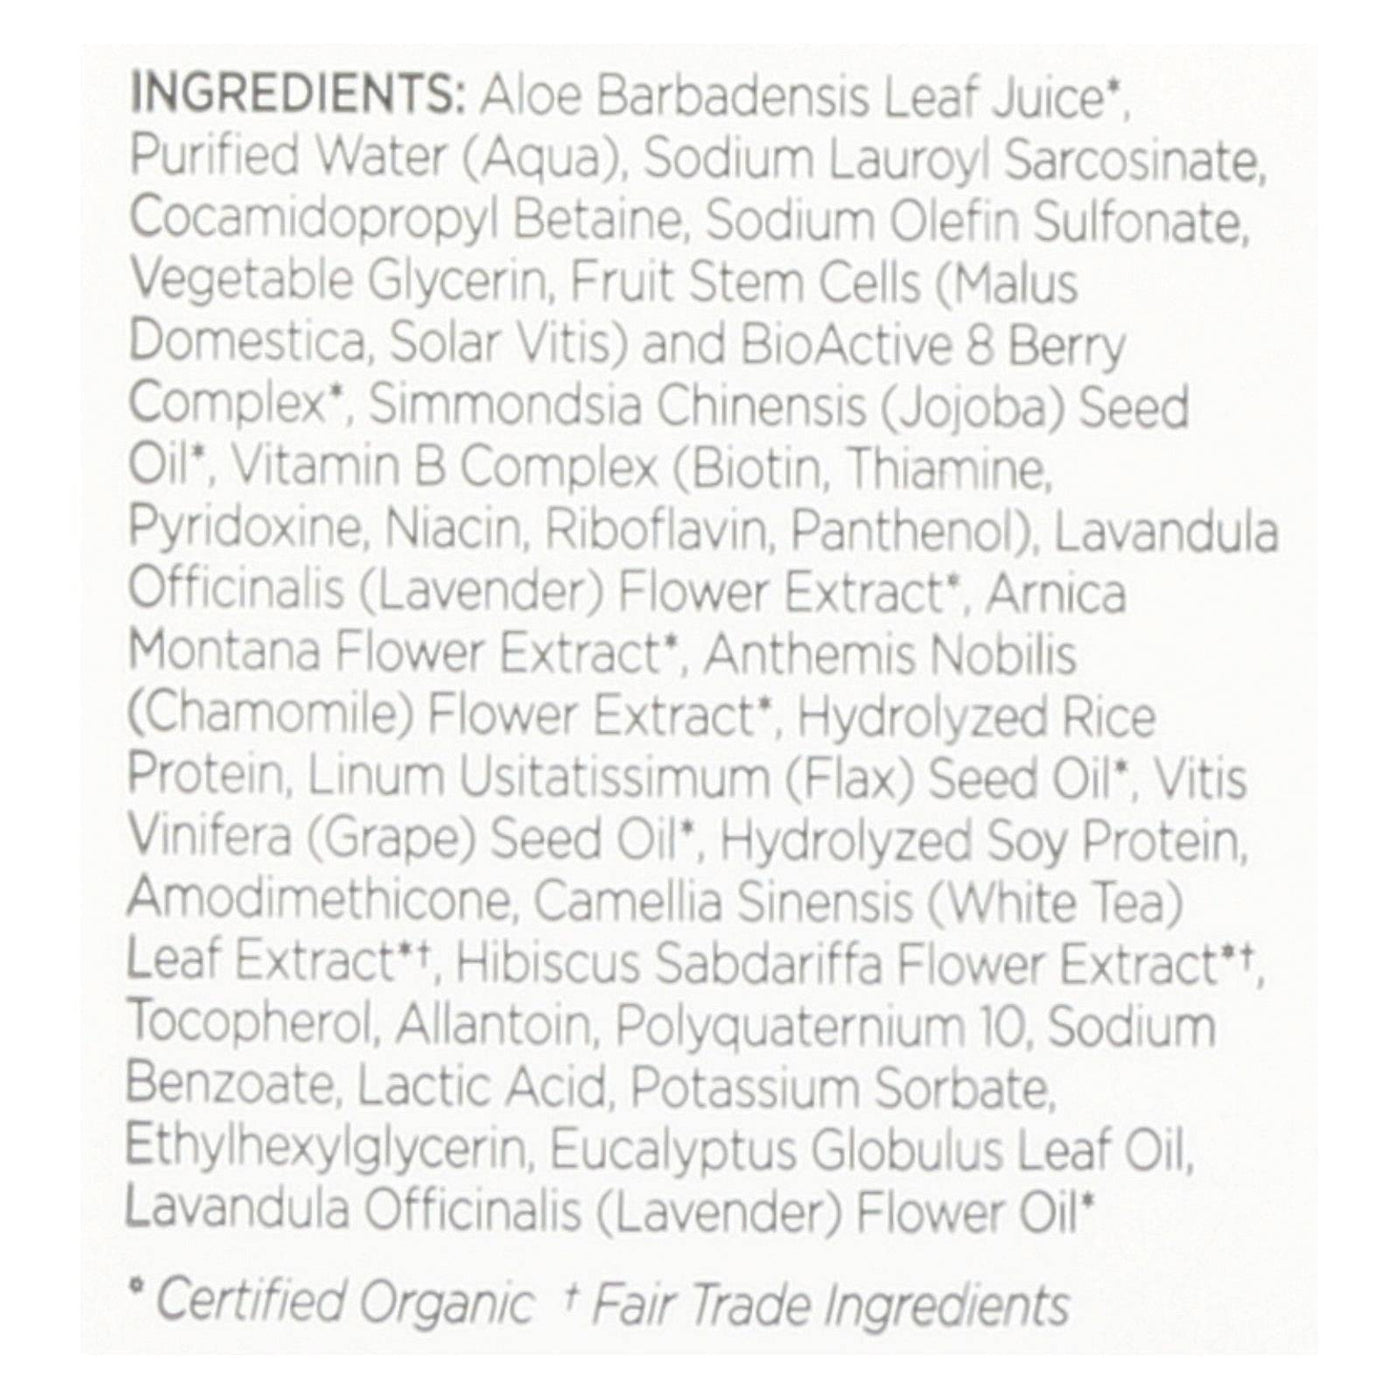 Buy Andalou Naturals Full Volume Shampoo Lavender And Biotin - 11.5 Fl Oz  at OnlyNaturals.us